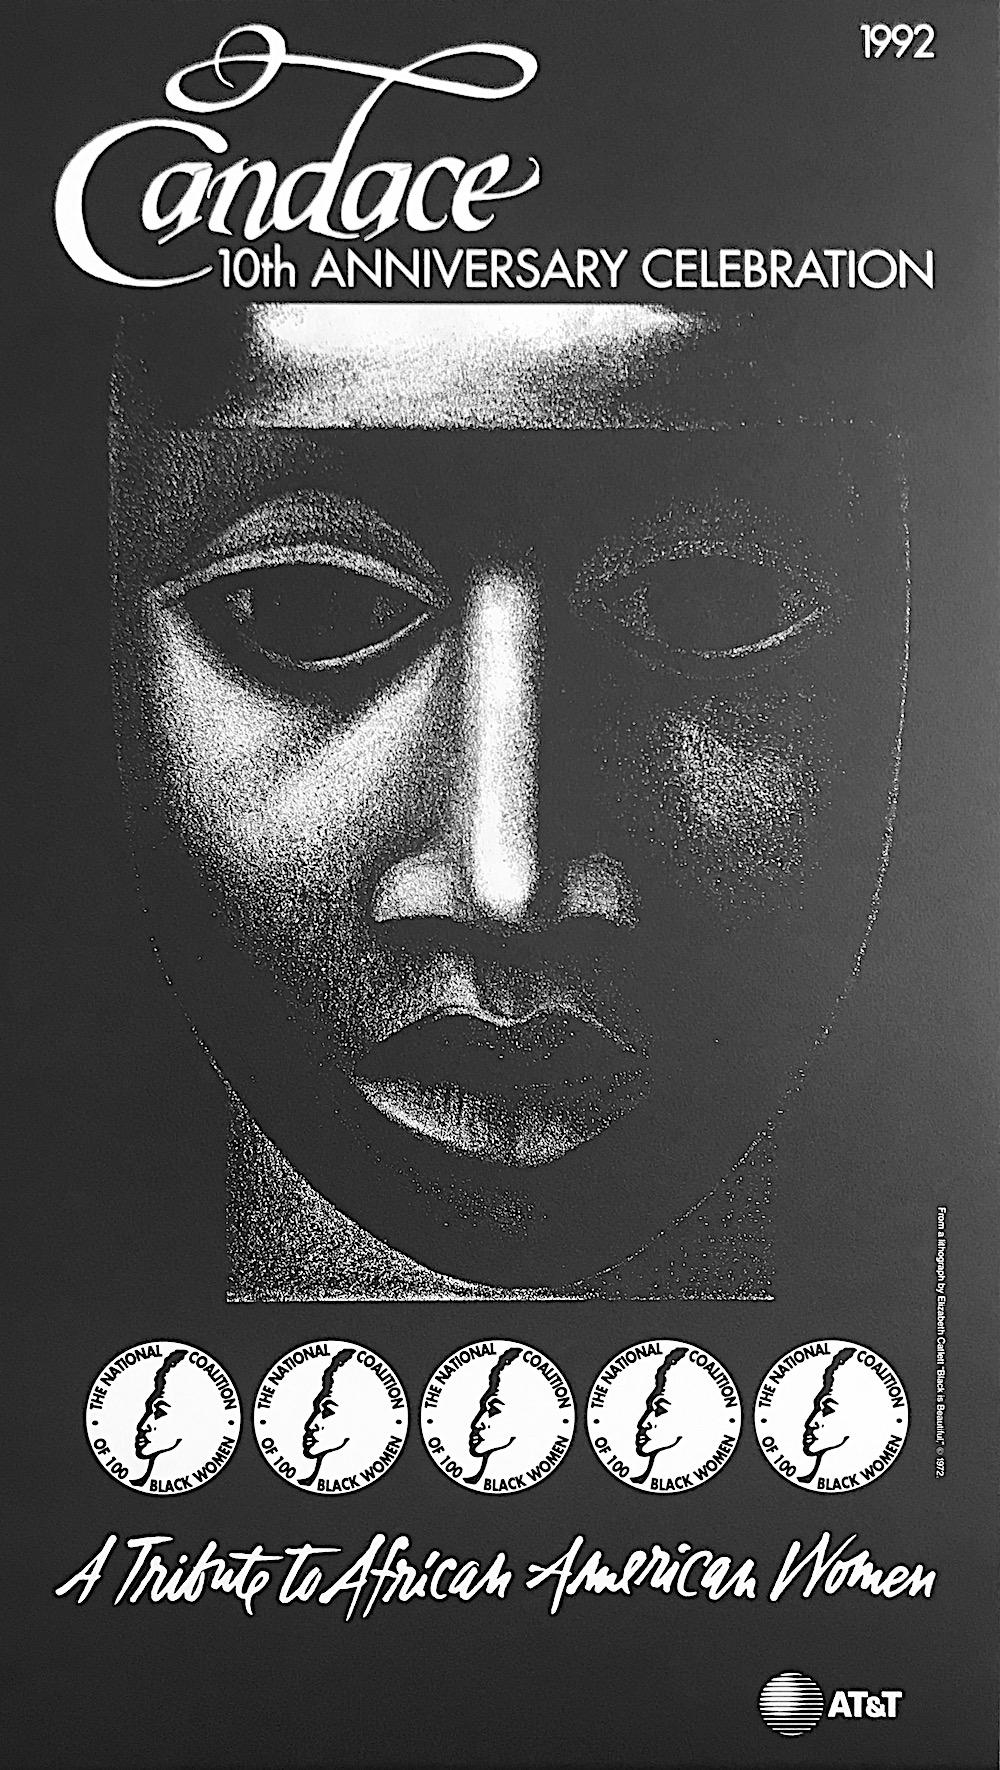 Elizabeth Catlett Print - CANDACE 1992 Tribute To African American Women, Commemorative Art Poster